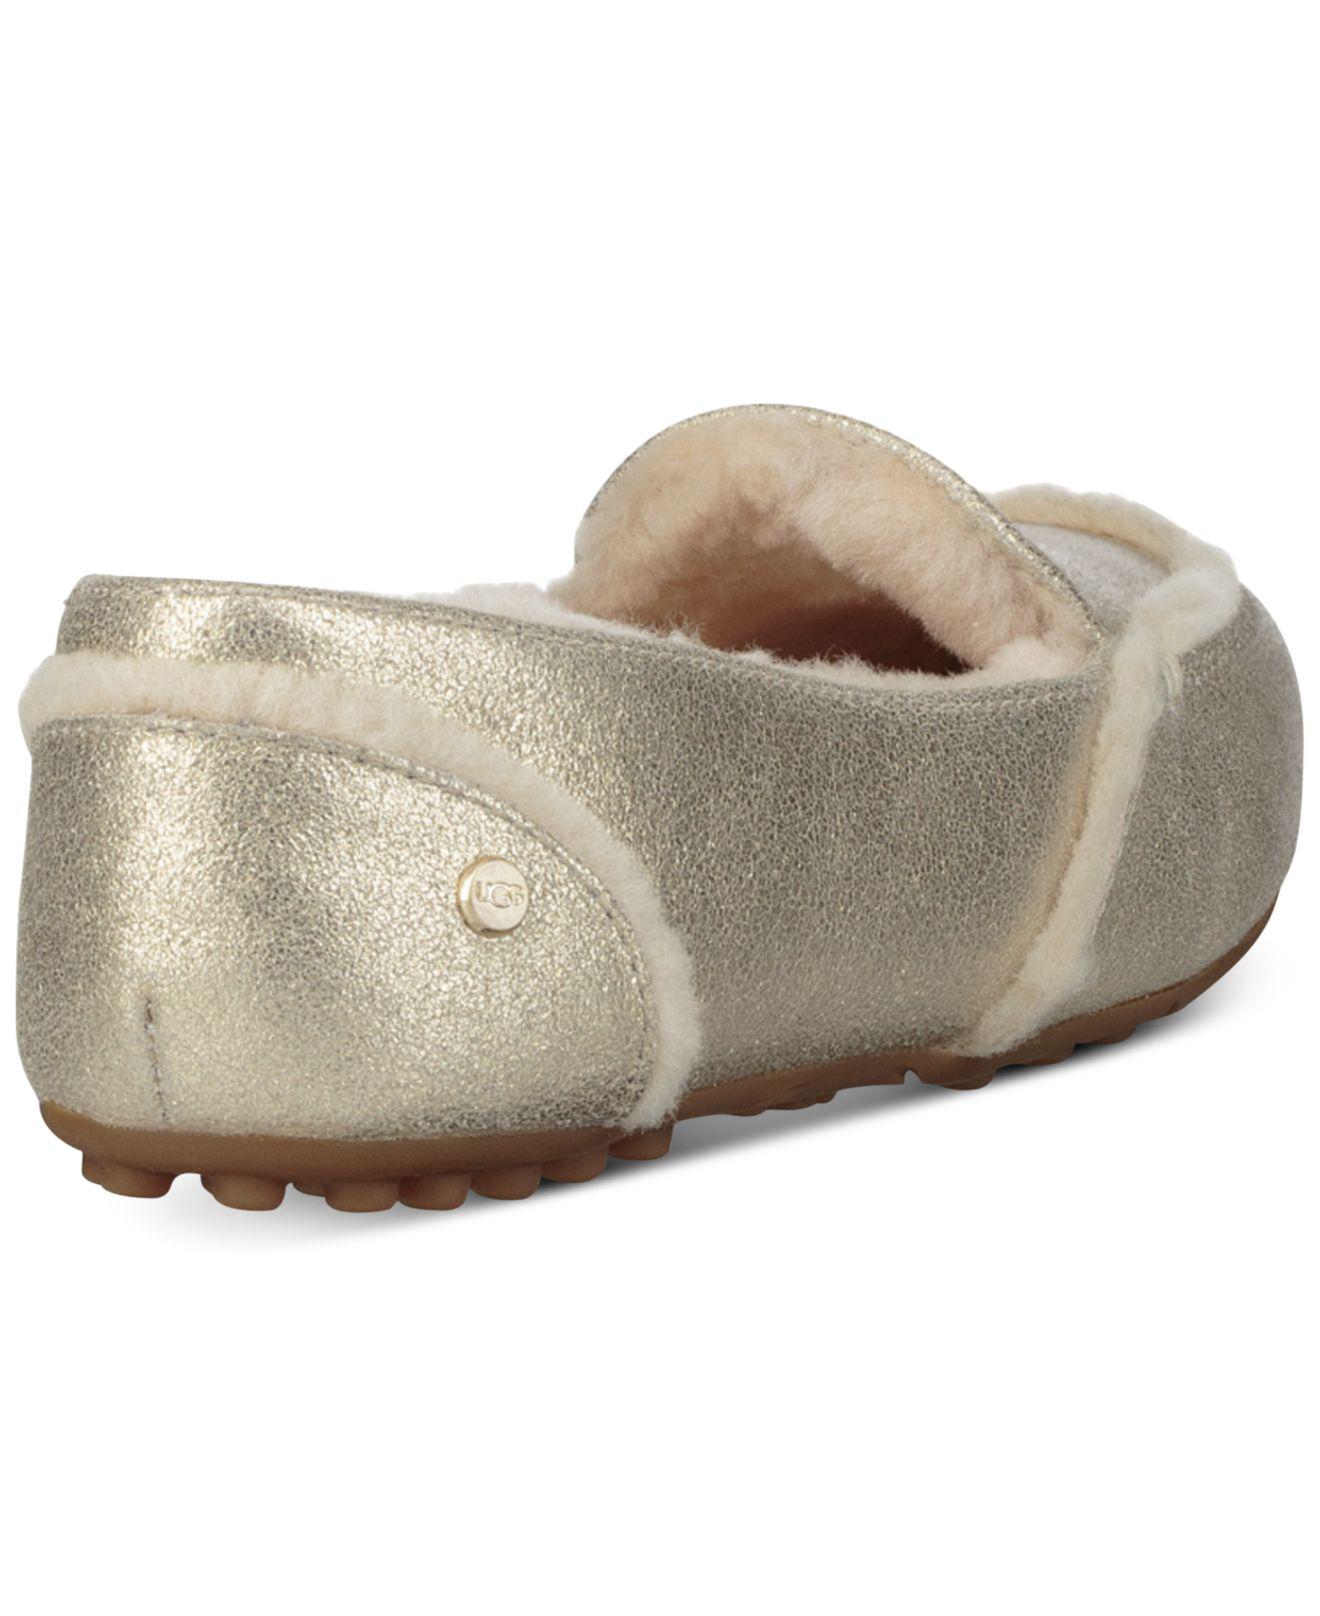 ugg hailey metallic slipper